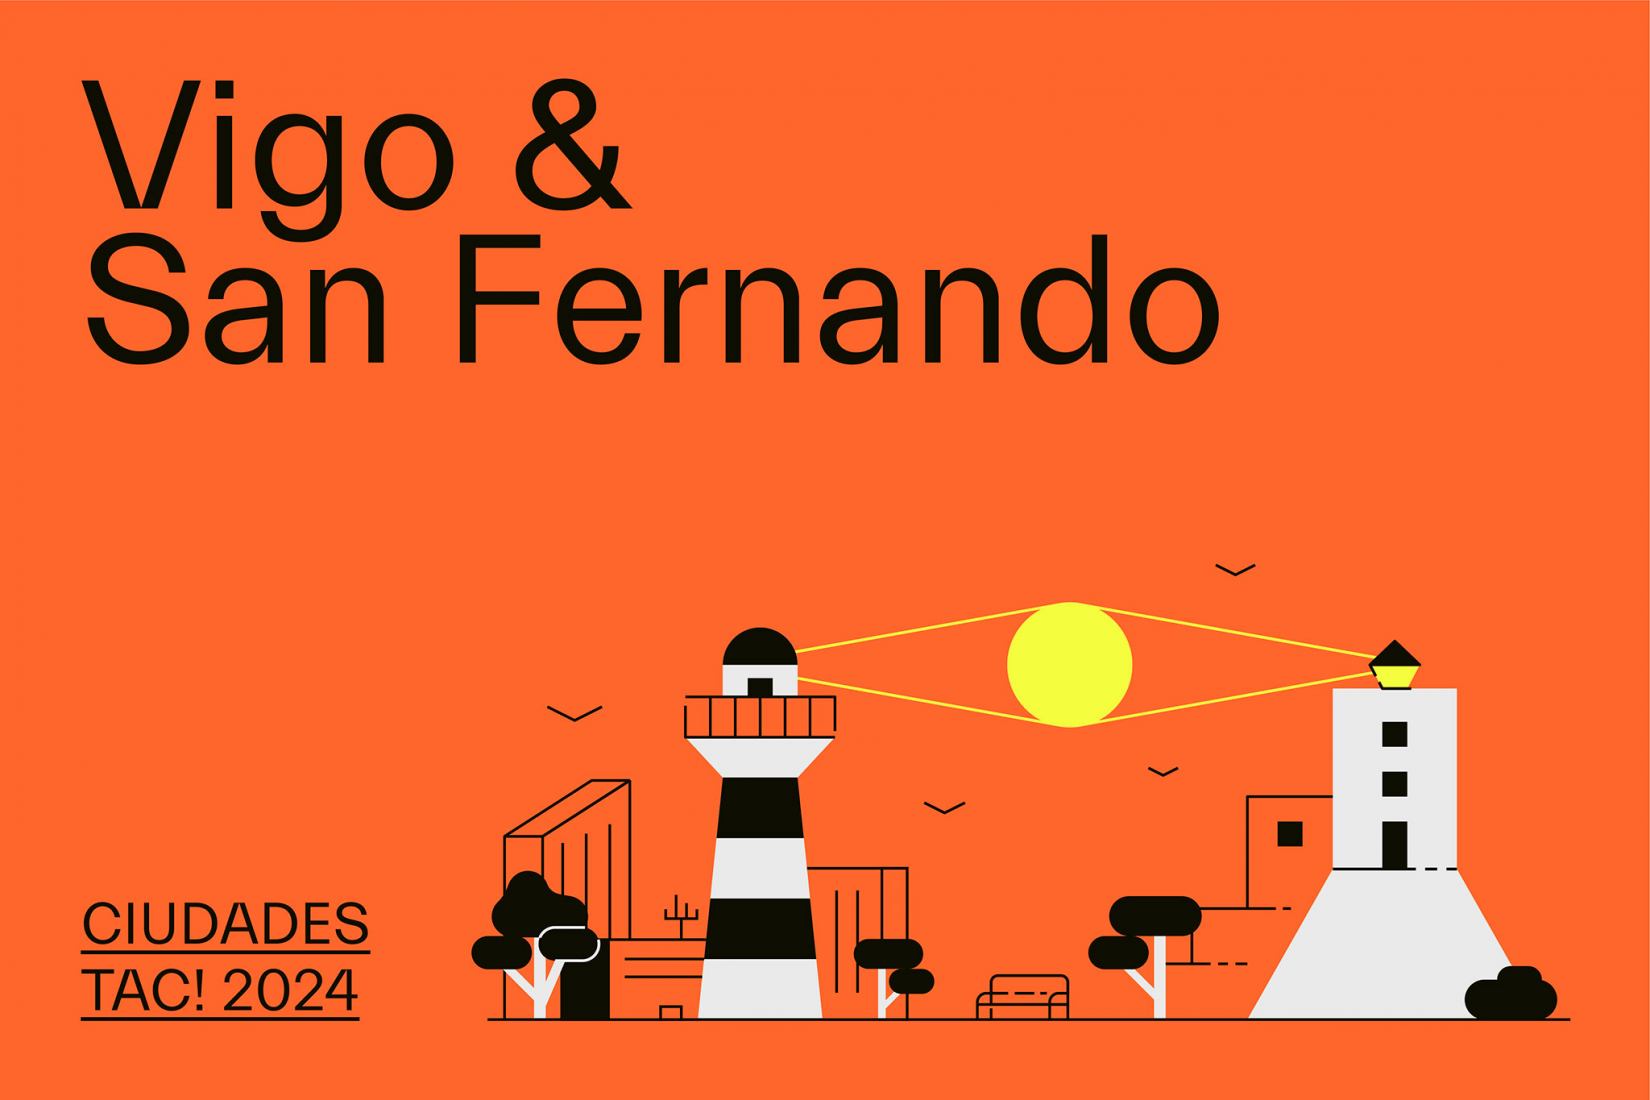 Vigo and San Fernando venues for the third edition of the urban architecture festival 